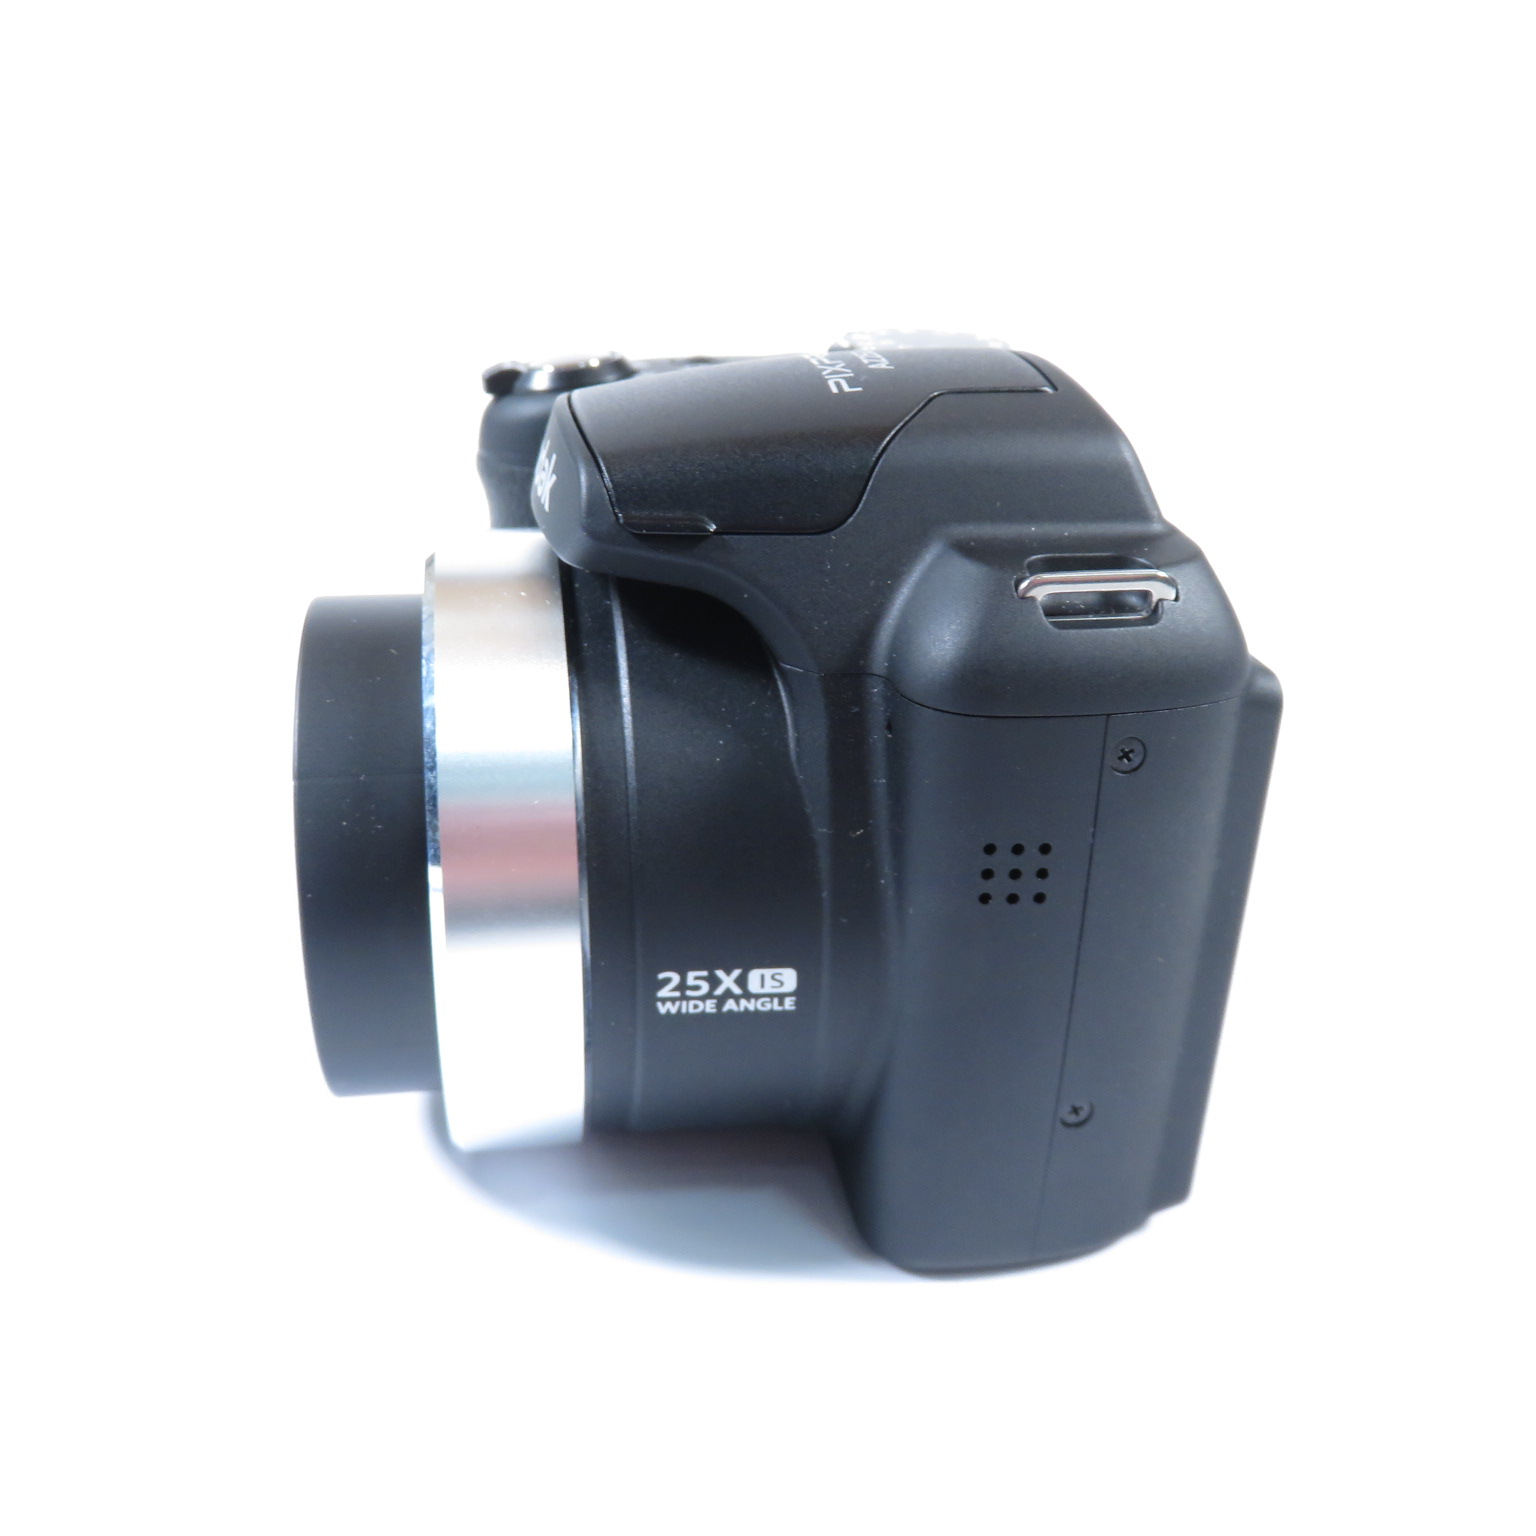  Kodak PIXPRO AZ252 Point & Shoot Digital Camera with 3” LCD,  Black : Electronics